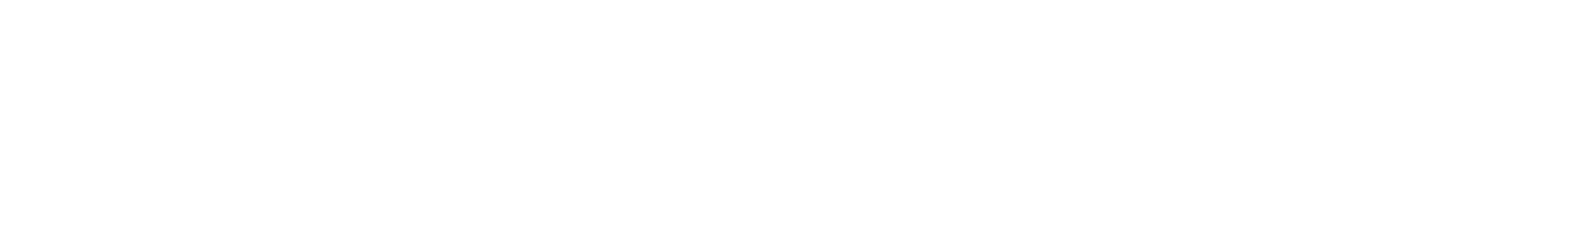 Logotipo de Garmin PNG